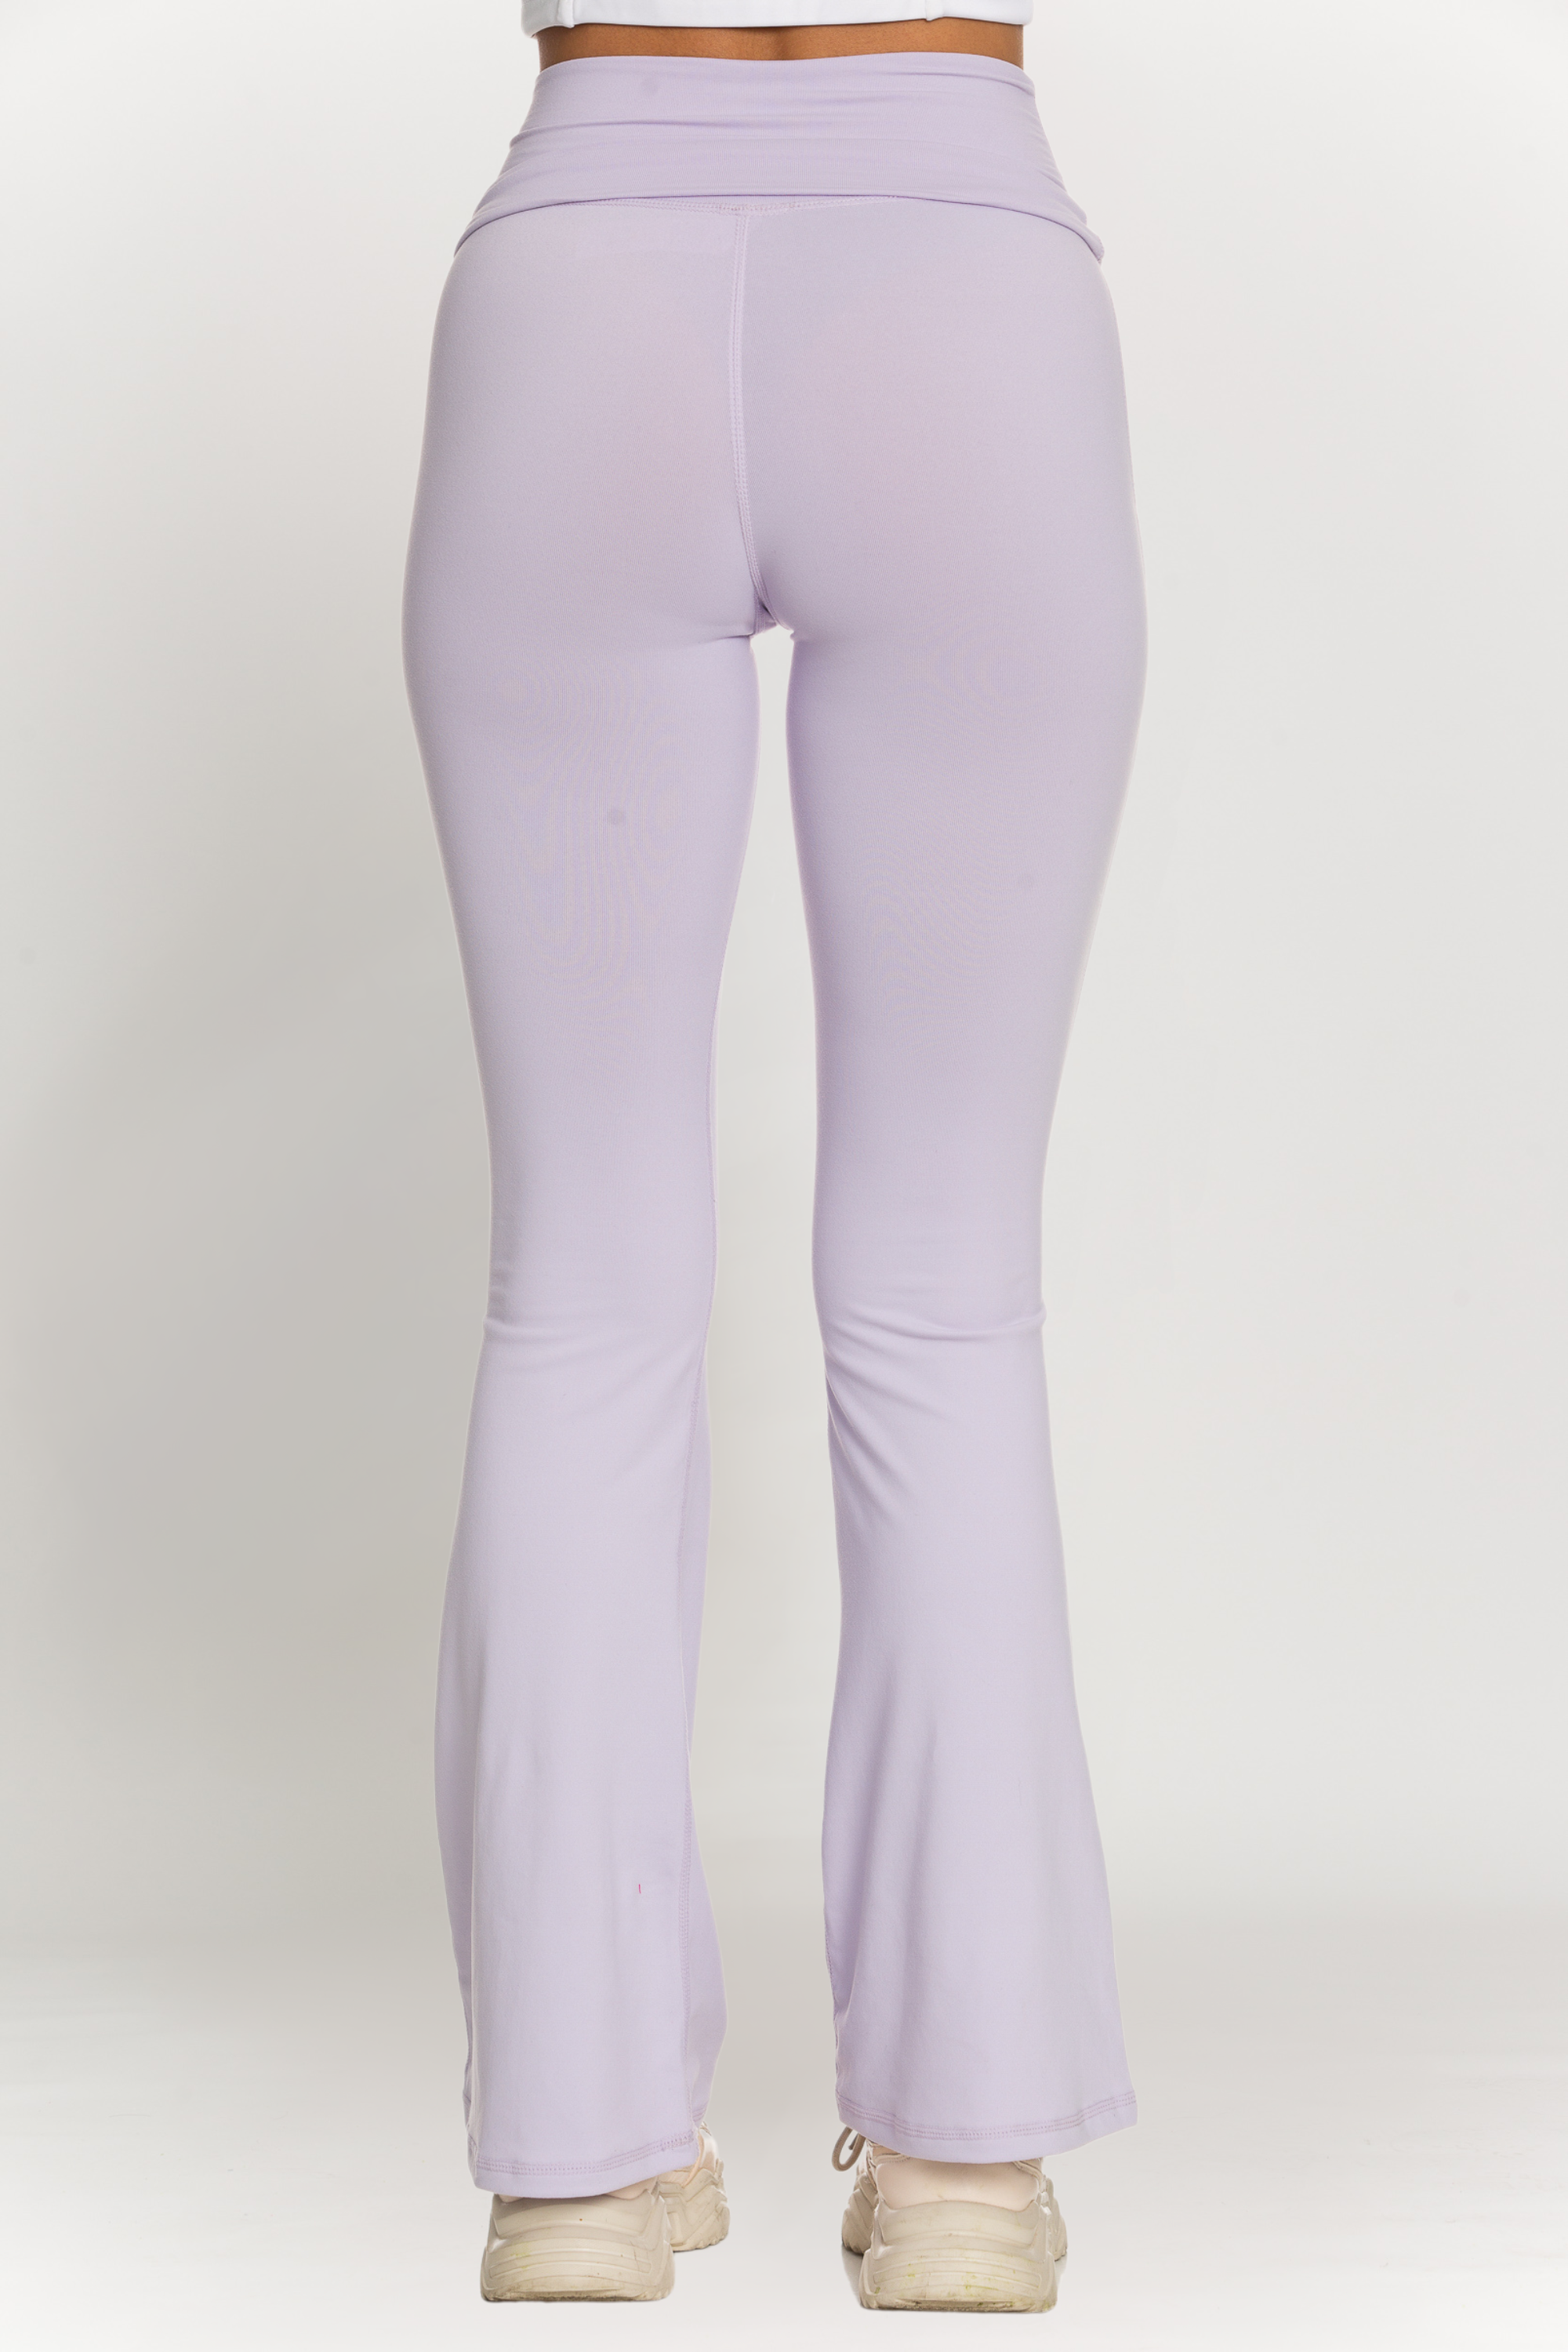 Lavender Multi-tasker Flare Yoga Pants